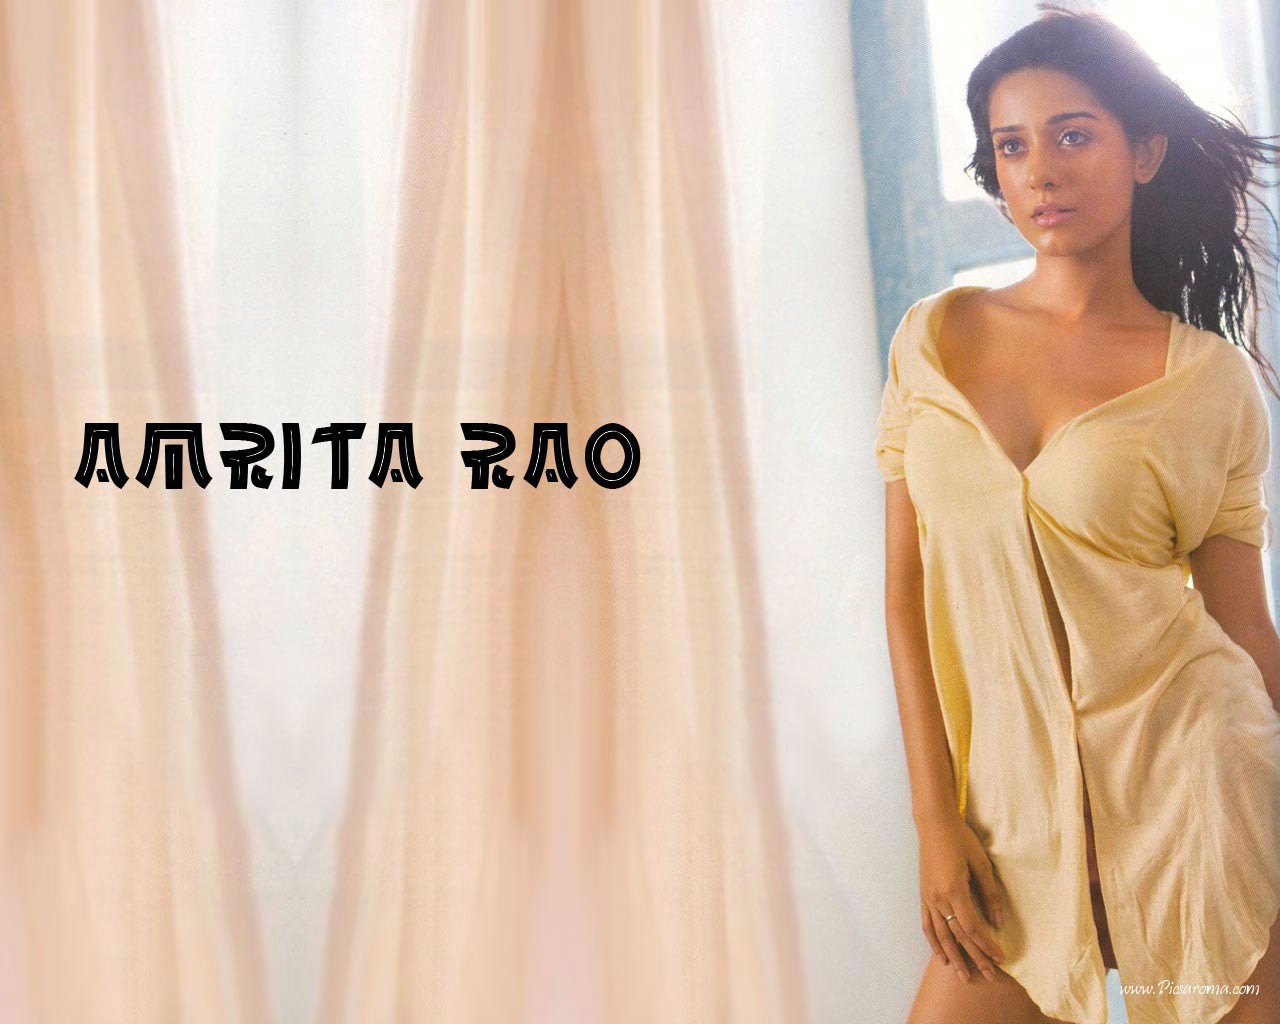 Bollywood Actress World (Original): Hot Amrita Rao Wallpapers